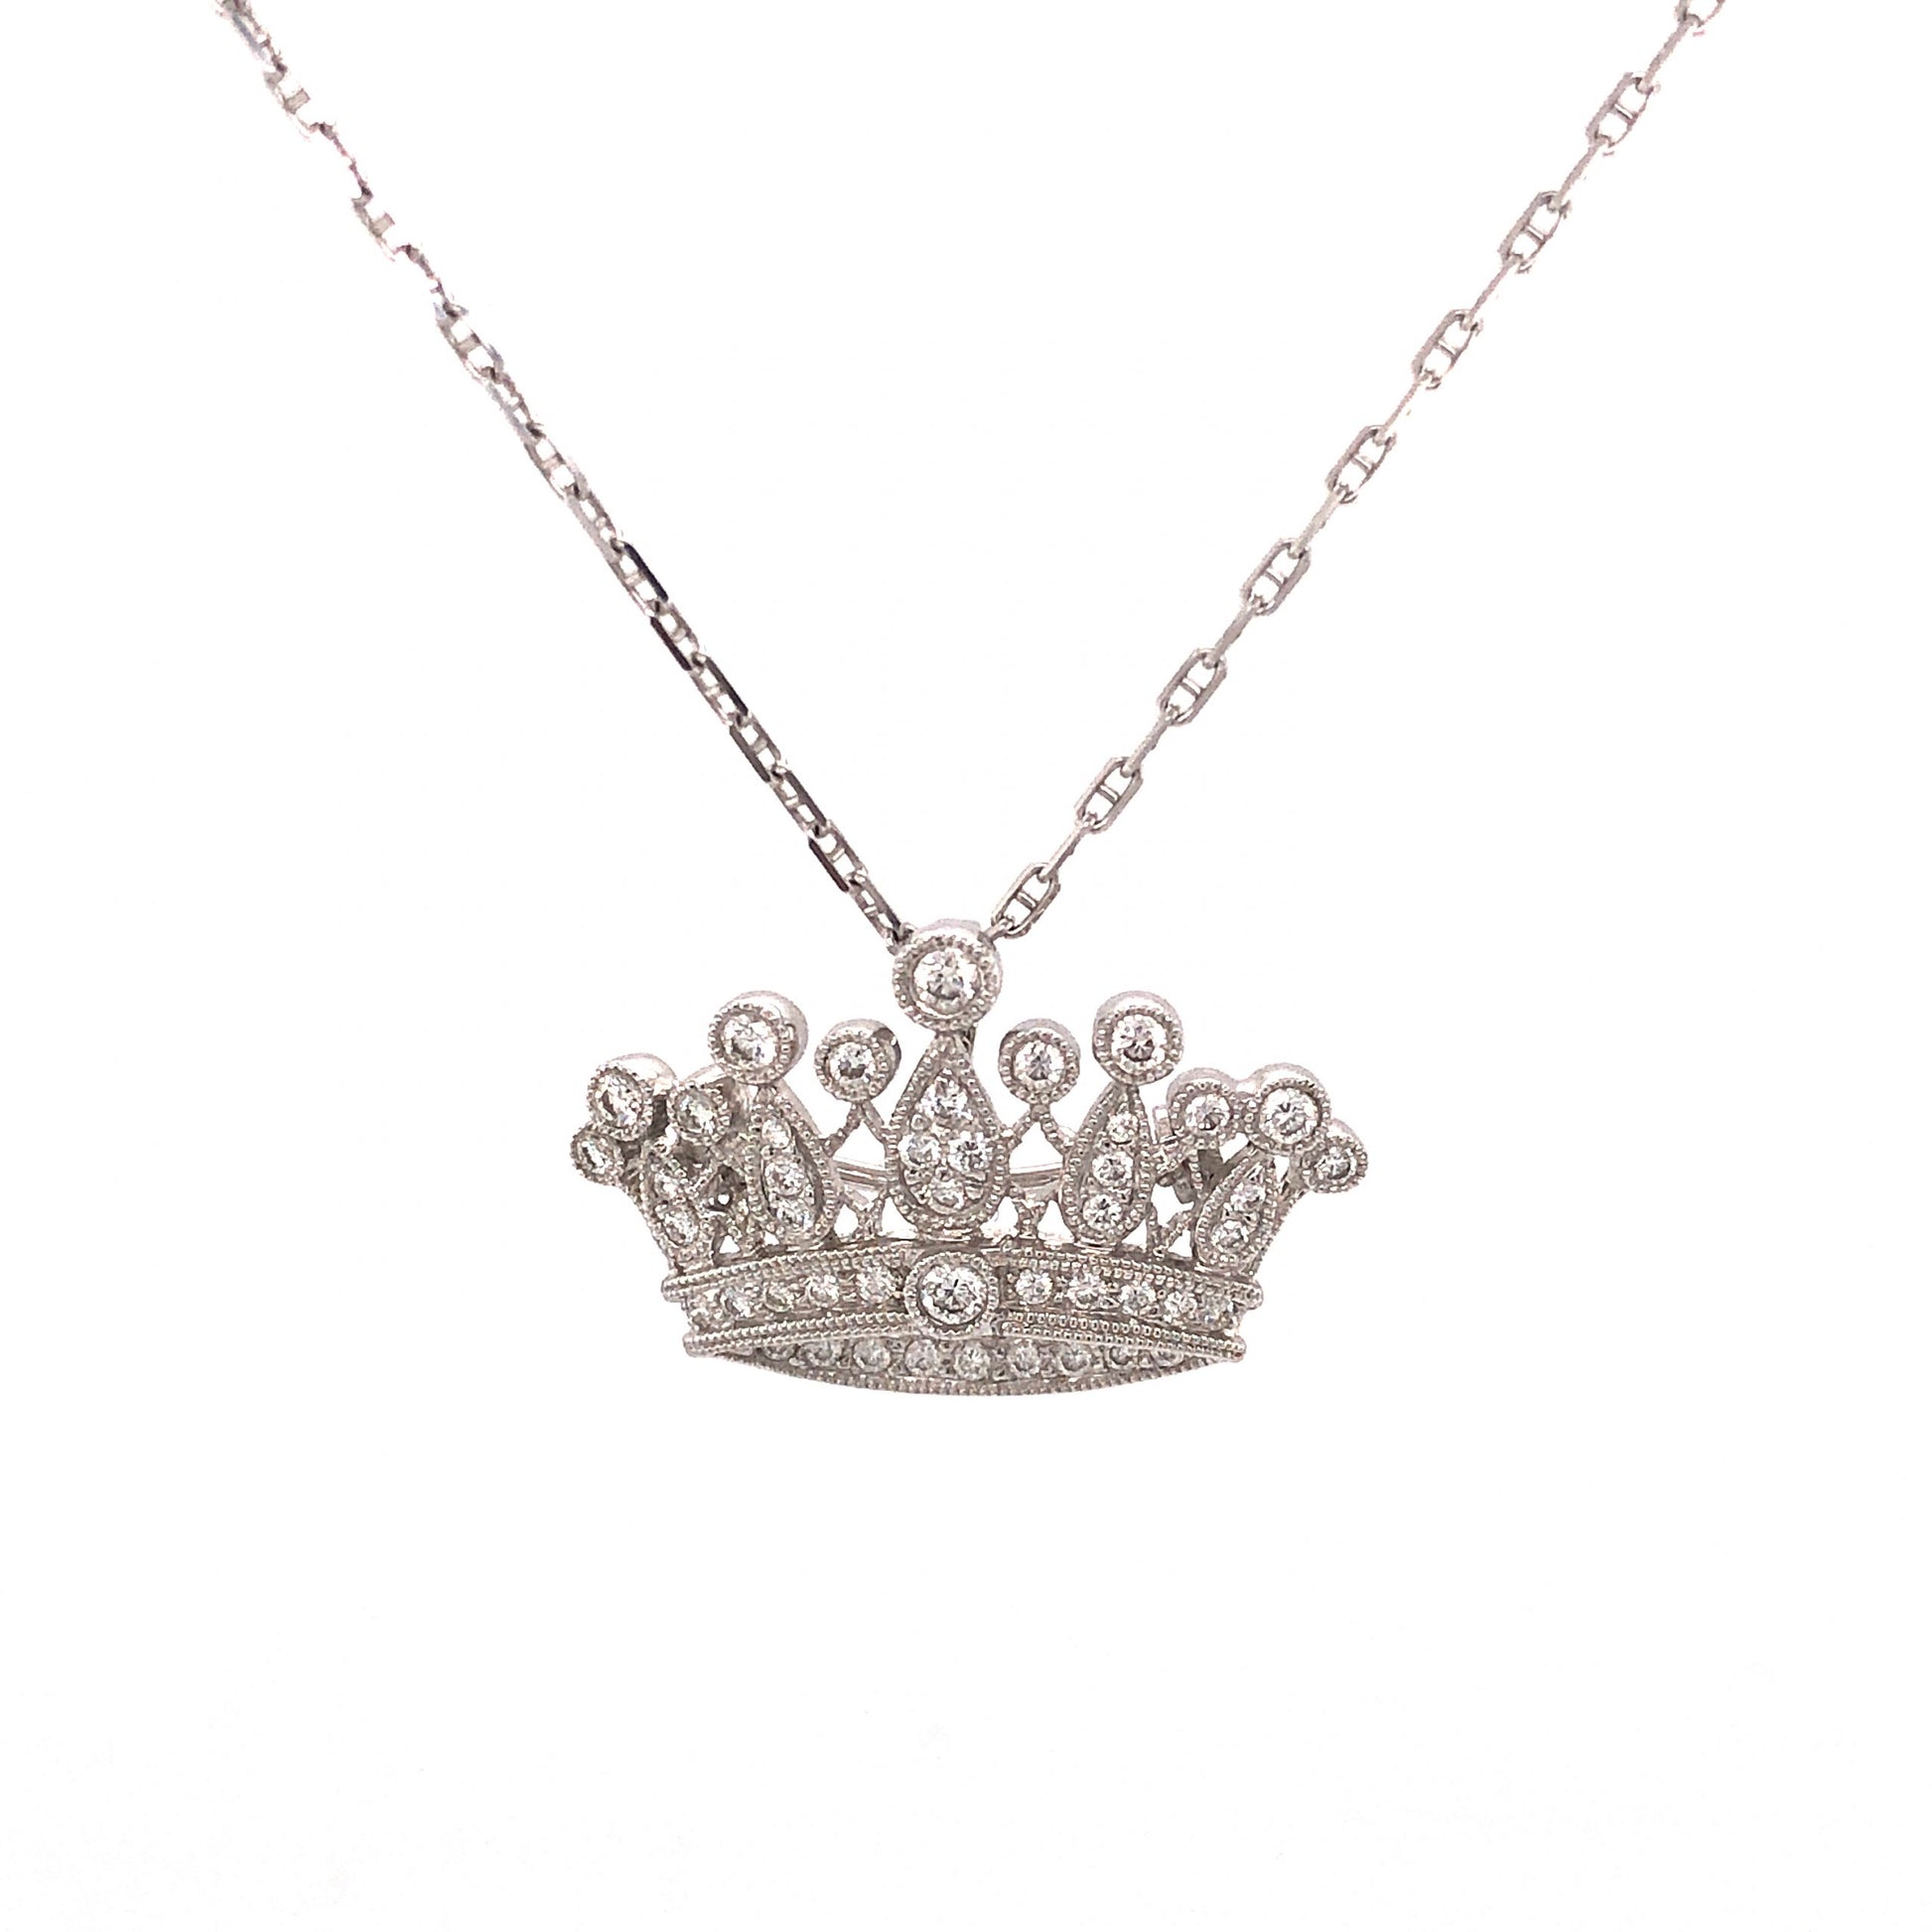 Diamond Crown Pendant Necklace in 18k White GoldComposition: 18 Karat White Gold/14 Karat White Gold Total Diamond Weight: .80ct Total Gram Weight: 6.4 g Inscription: 14k BERGMAN (Chain) 750 (Pendant)
      